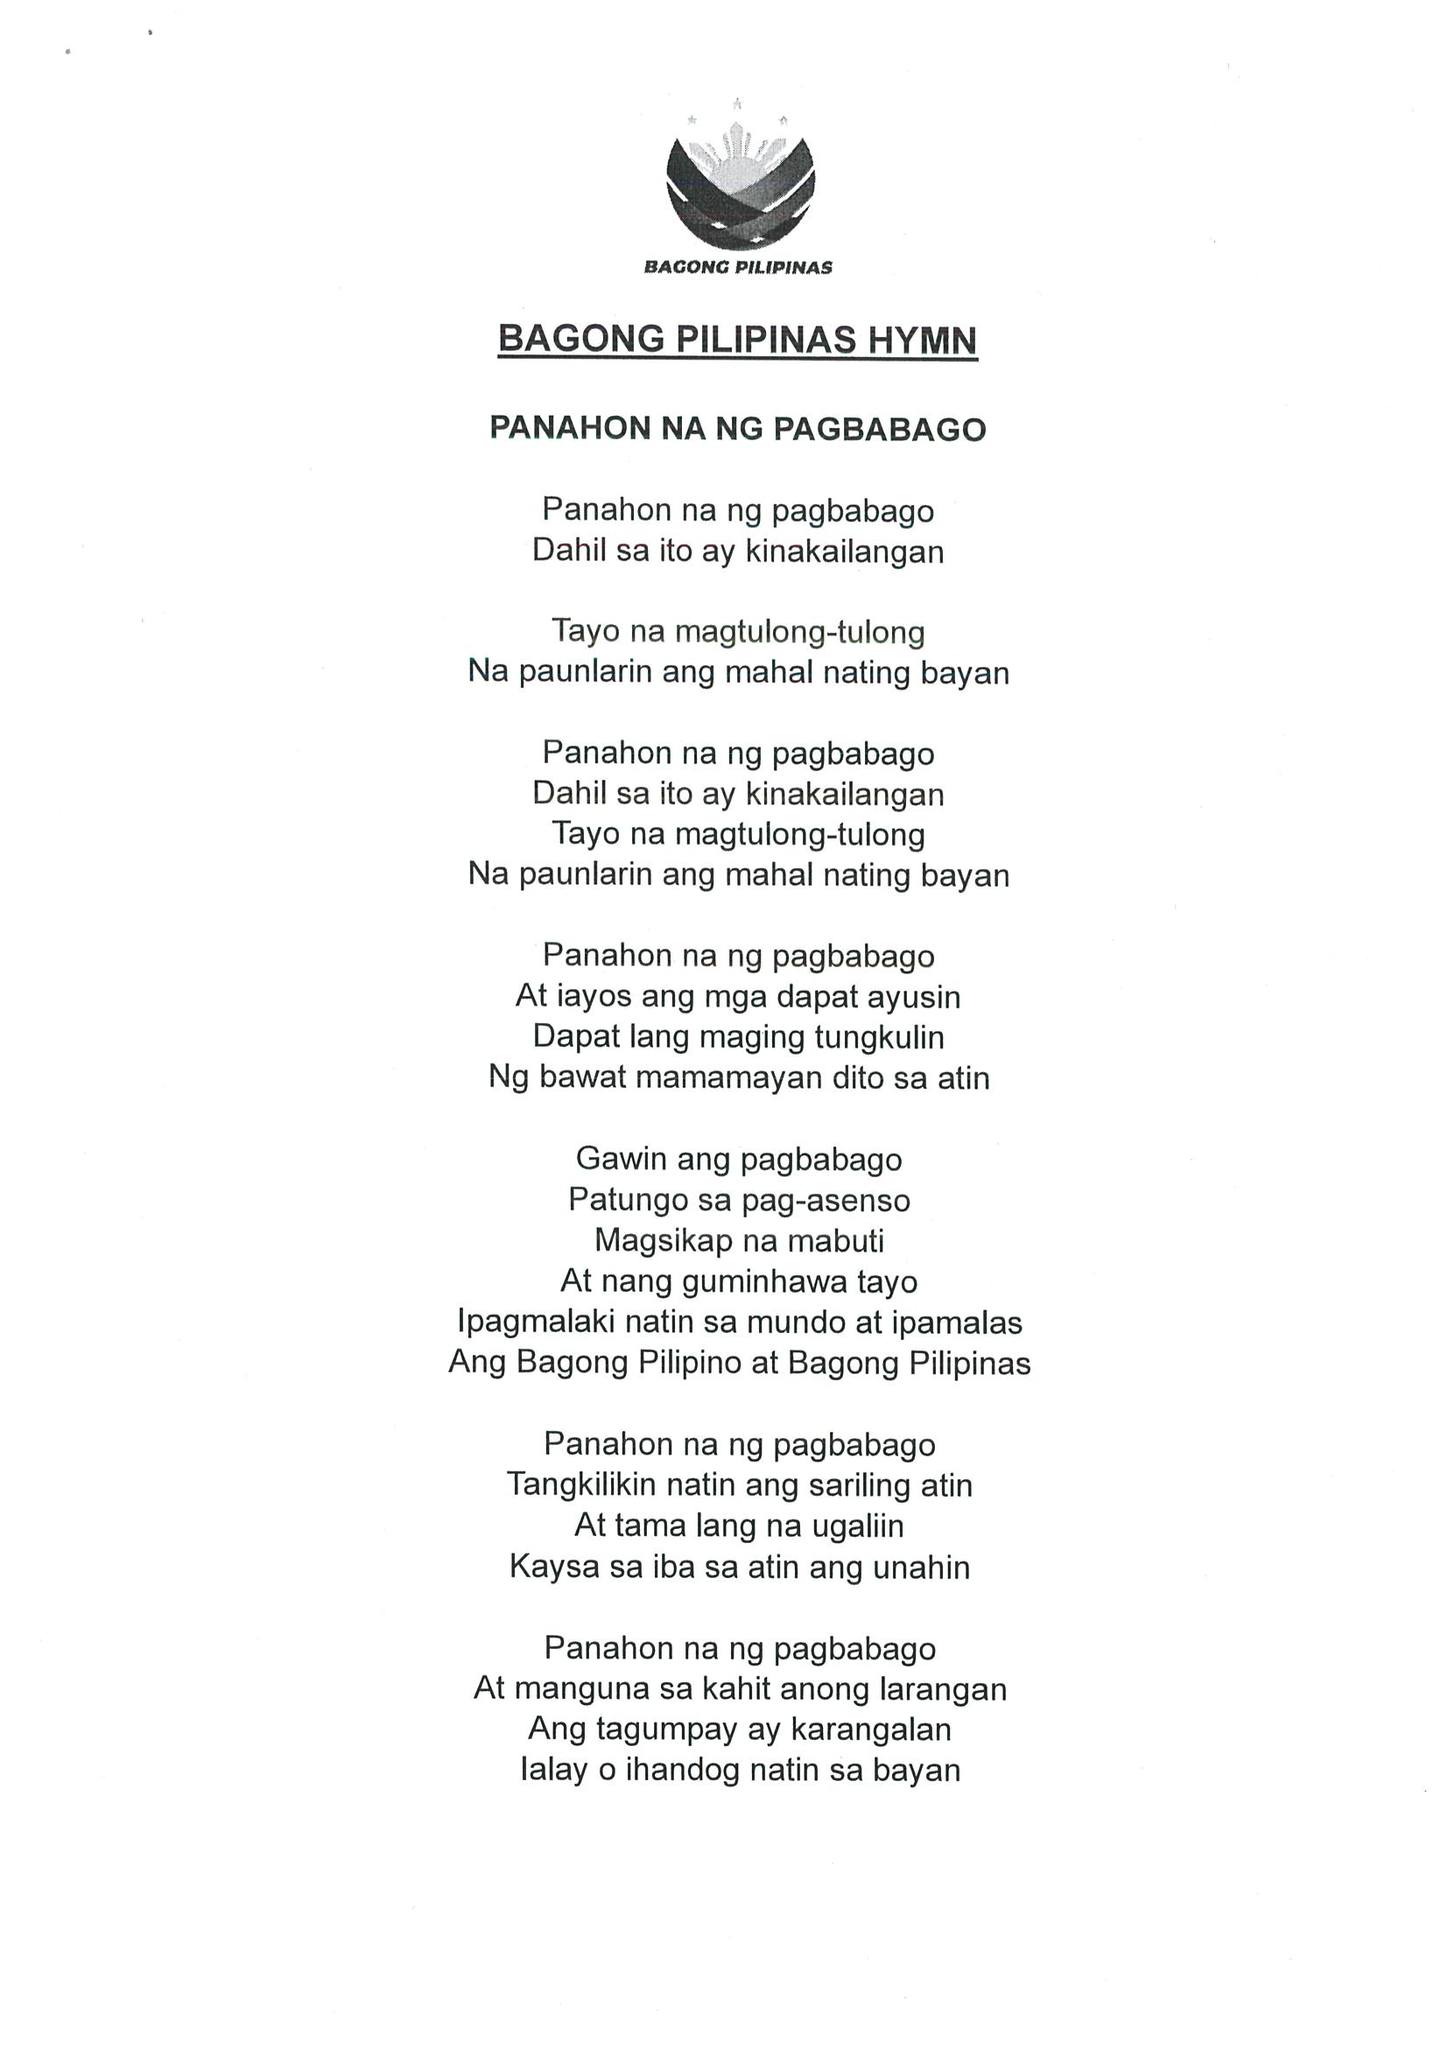 Bagong Pilipinas Hymm and Pledge